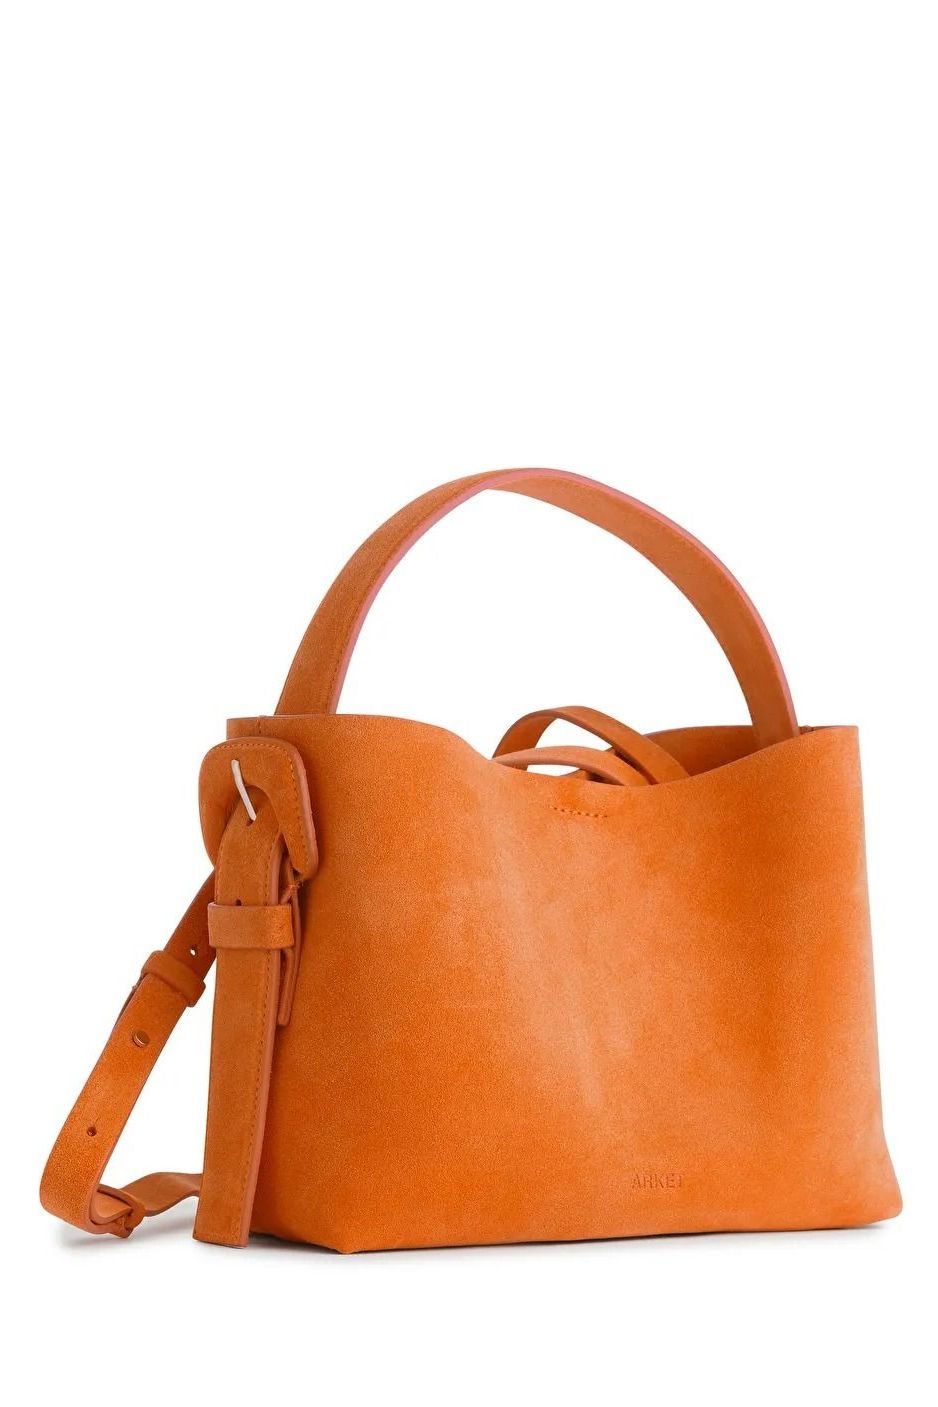 OverTheMoon H29 - Women - Handbags